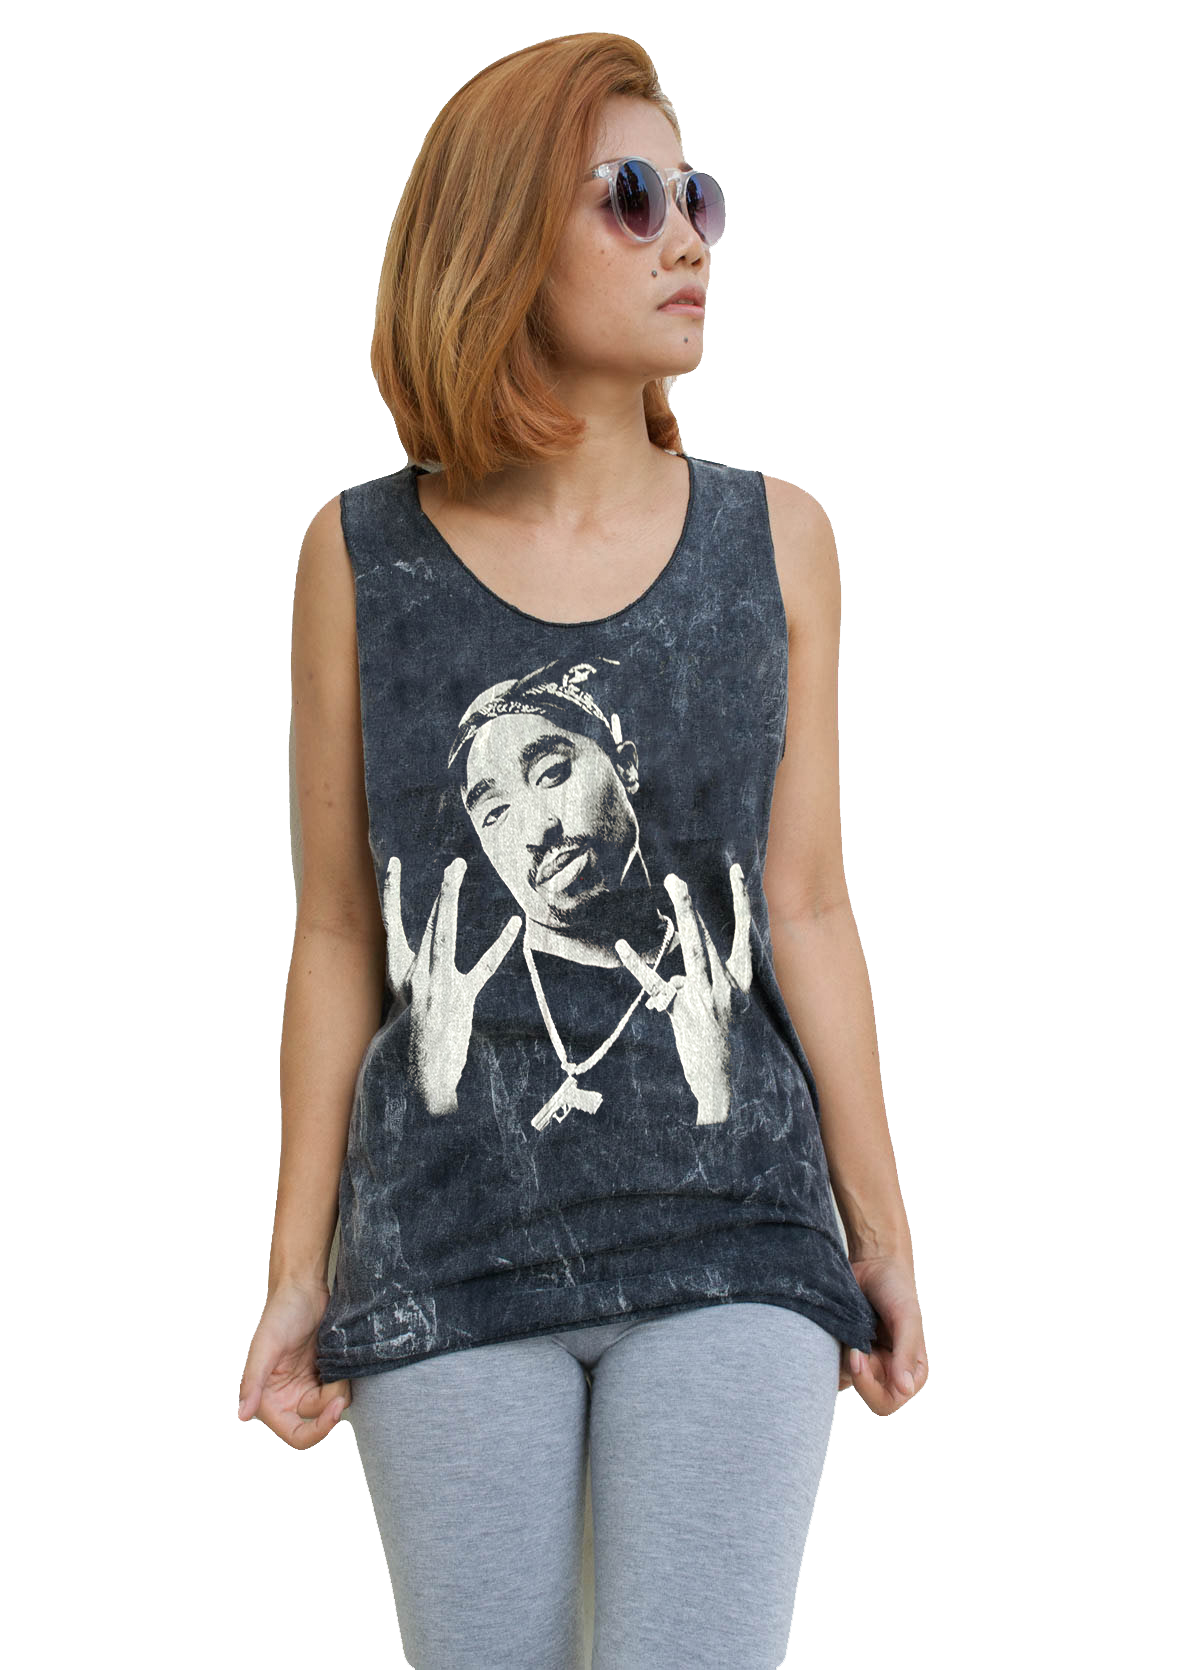 Unisex Tupac 2pac Tank-Top Singlet vest Sleeveless T-shirt